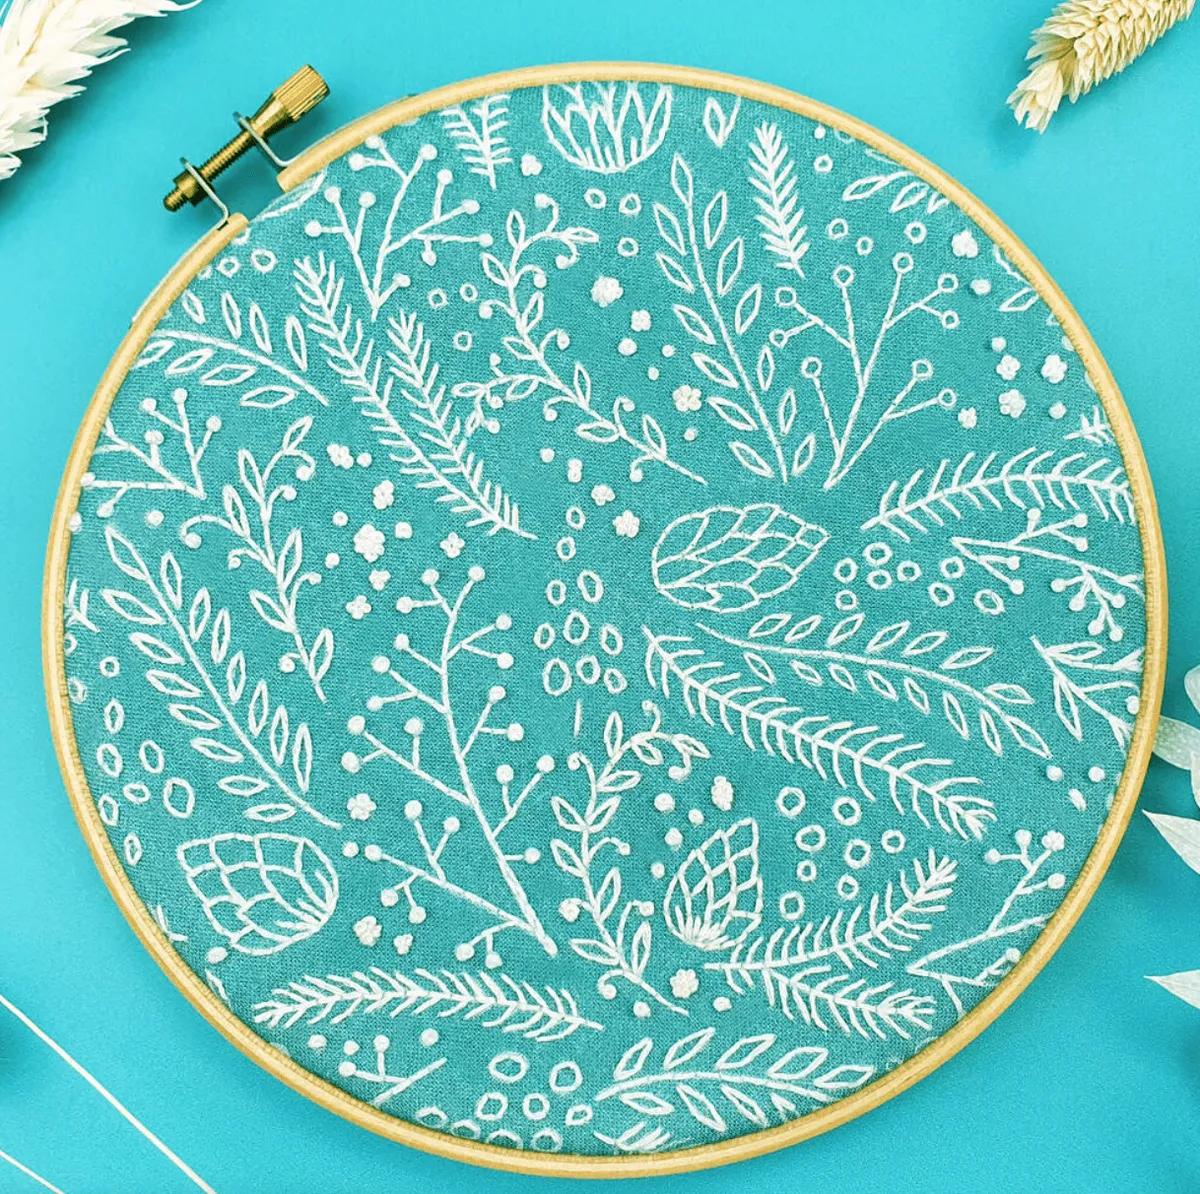 21 Christmas embroidery kits to make you feel festive - Gathered